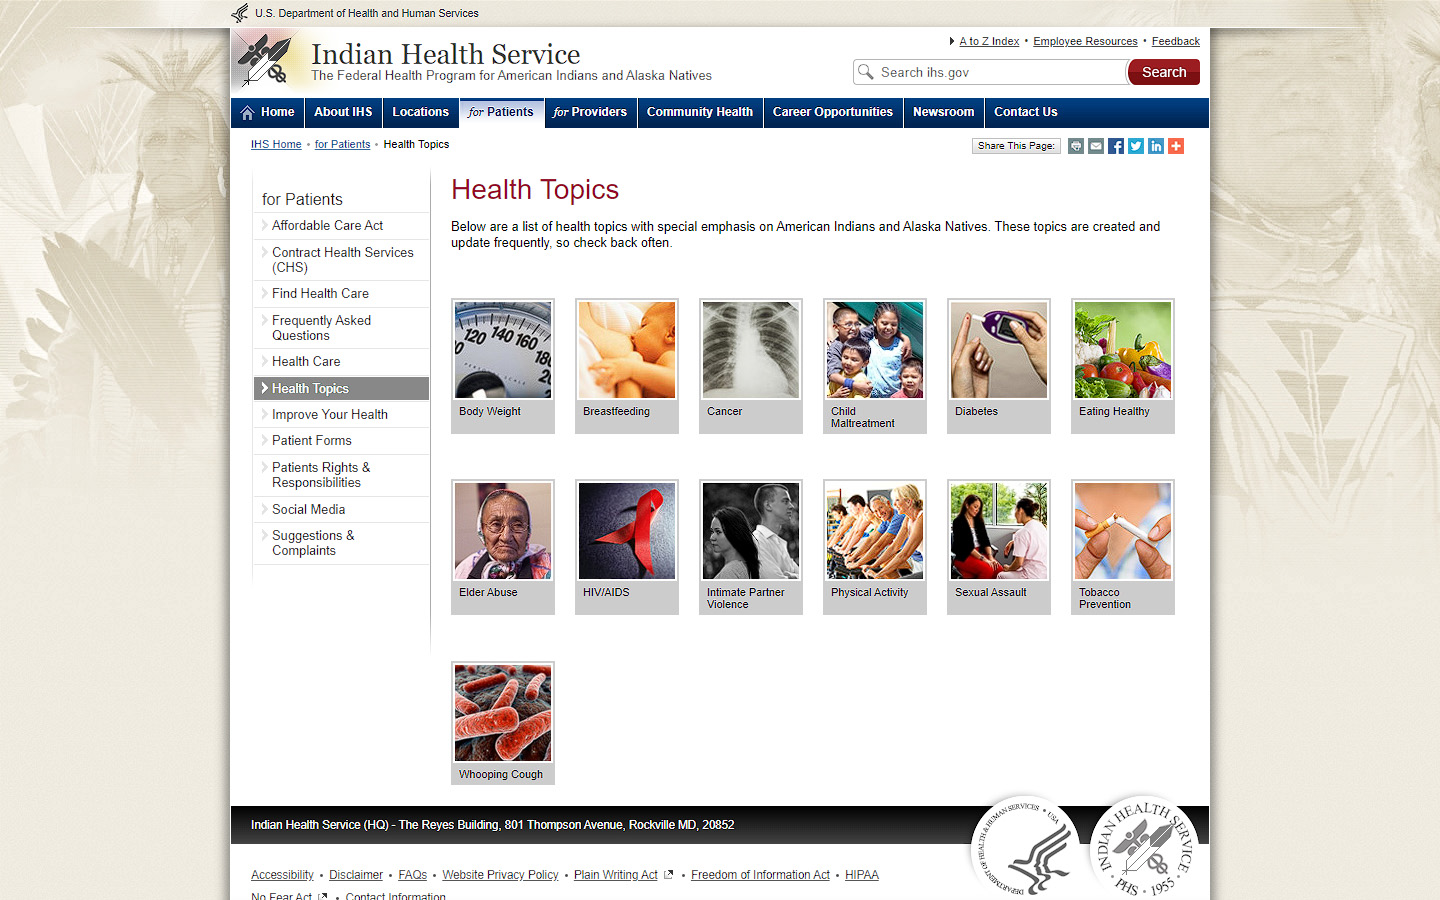 ihs.gov health topics page